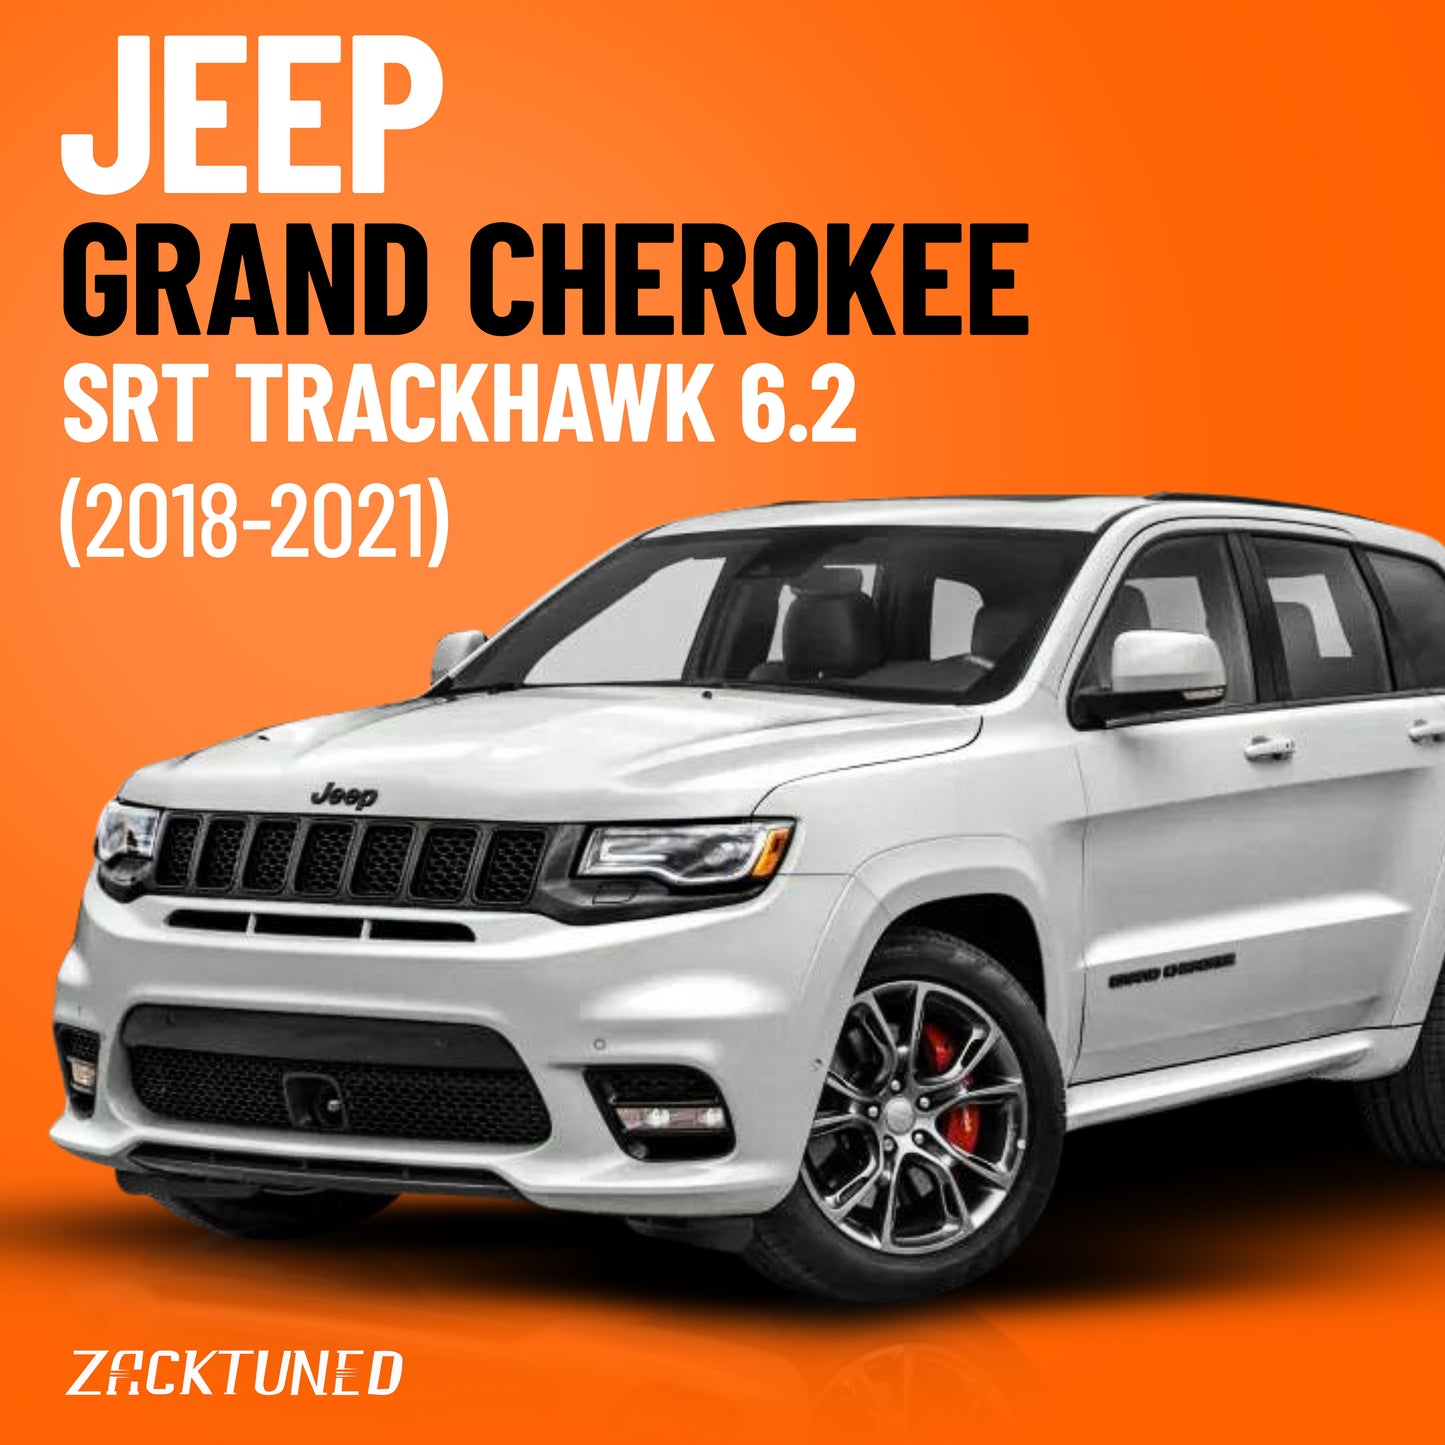 Jeep Grand Cherokee SRT Trackhawk 6.2 (2018-2021)